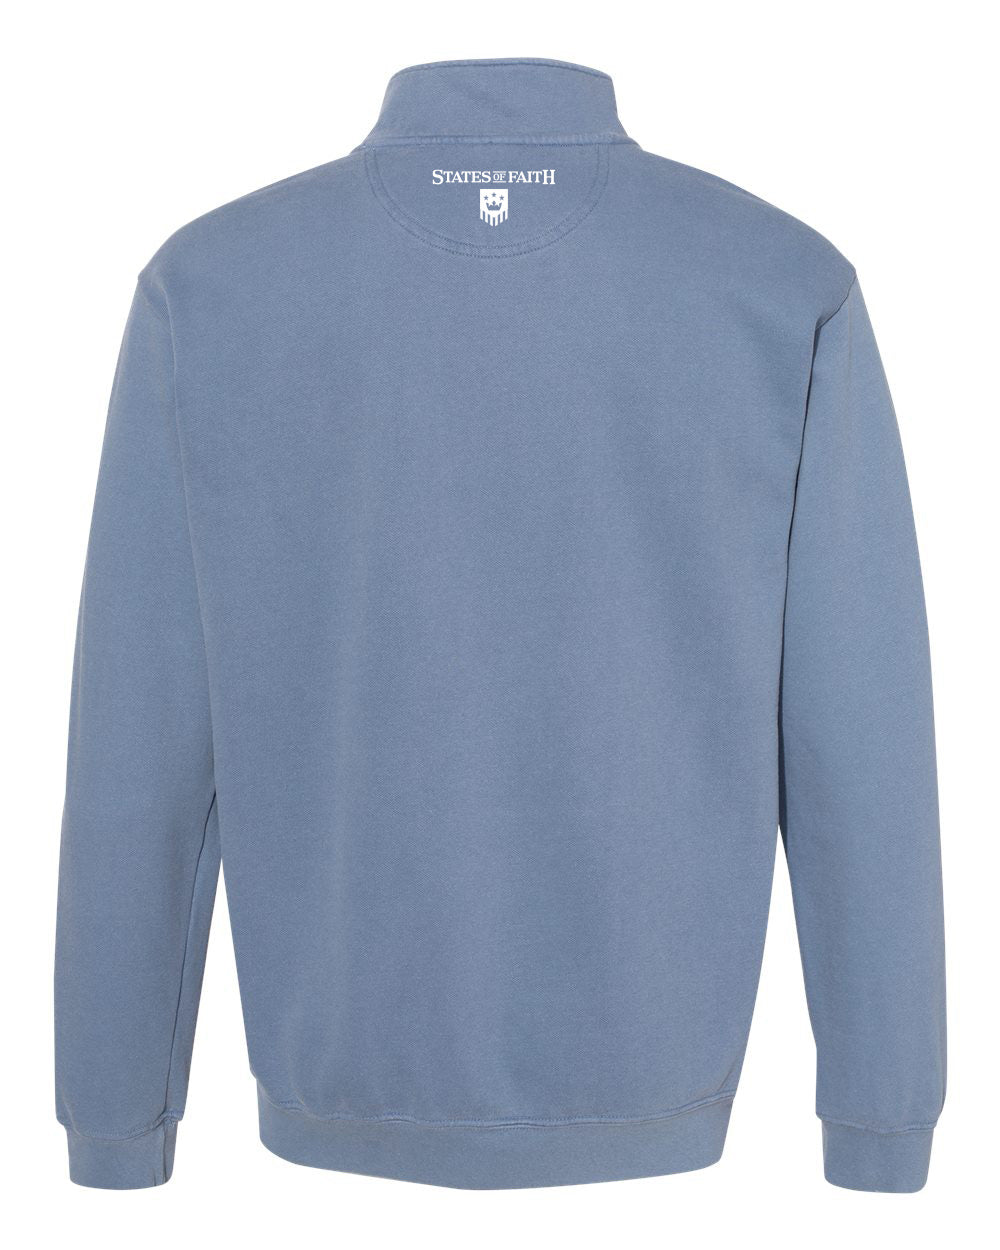 Arkansas State Catholic Rosary custom sweatshirt, drop hoodie, comfort colors quarter zip, pullover, Gift, State Pride, blue jean-back